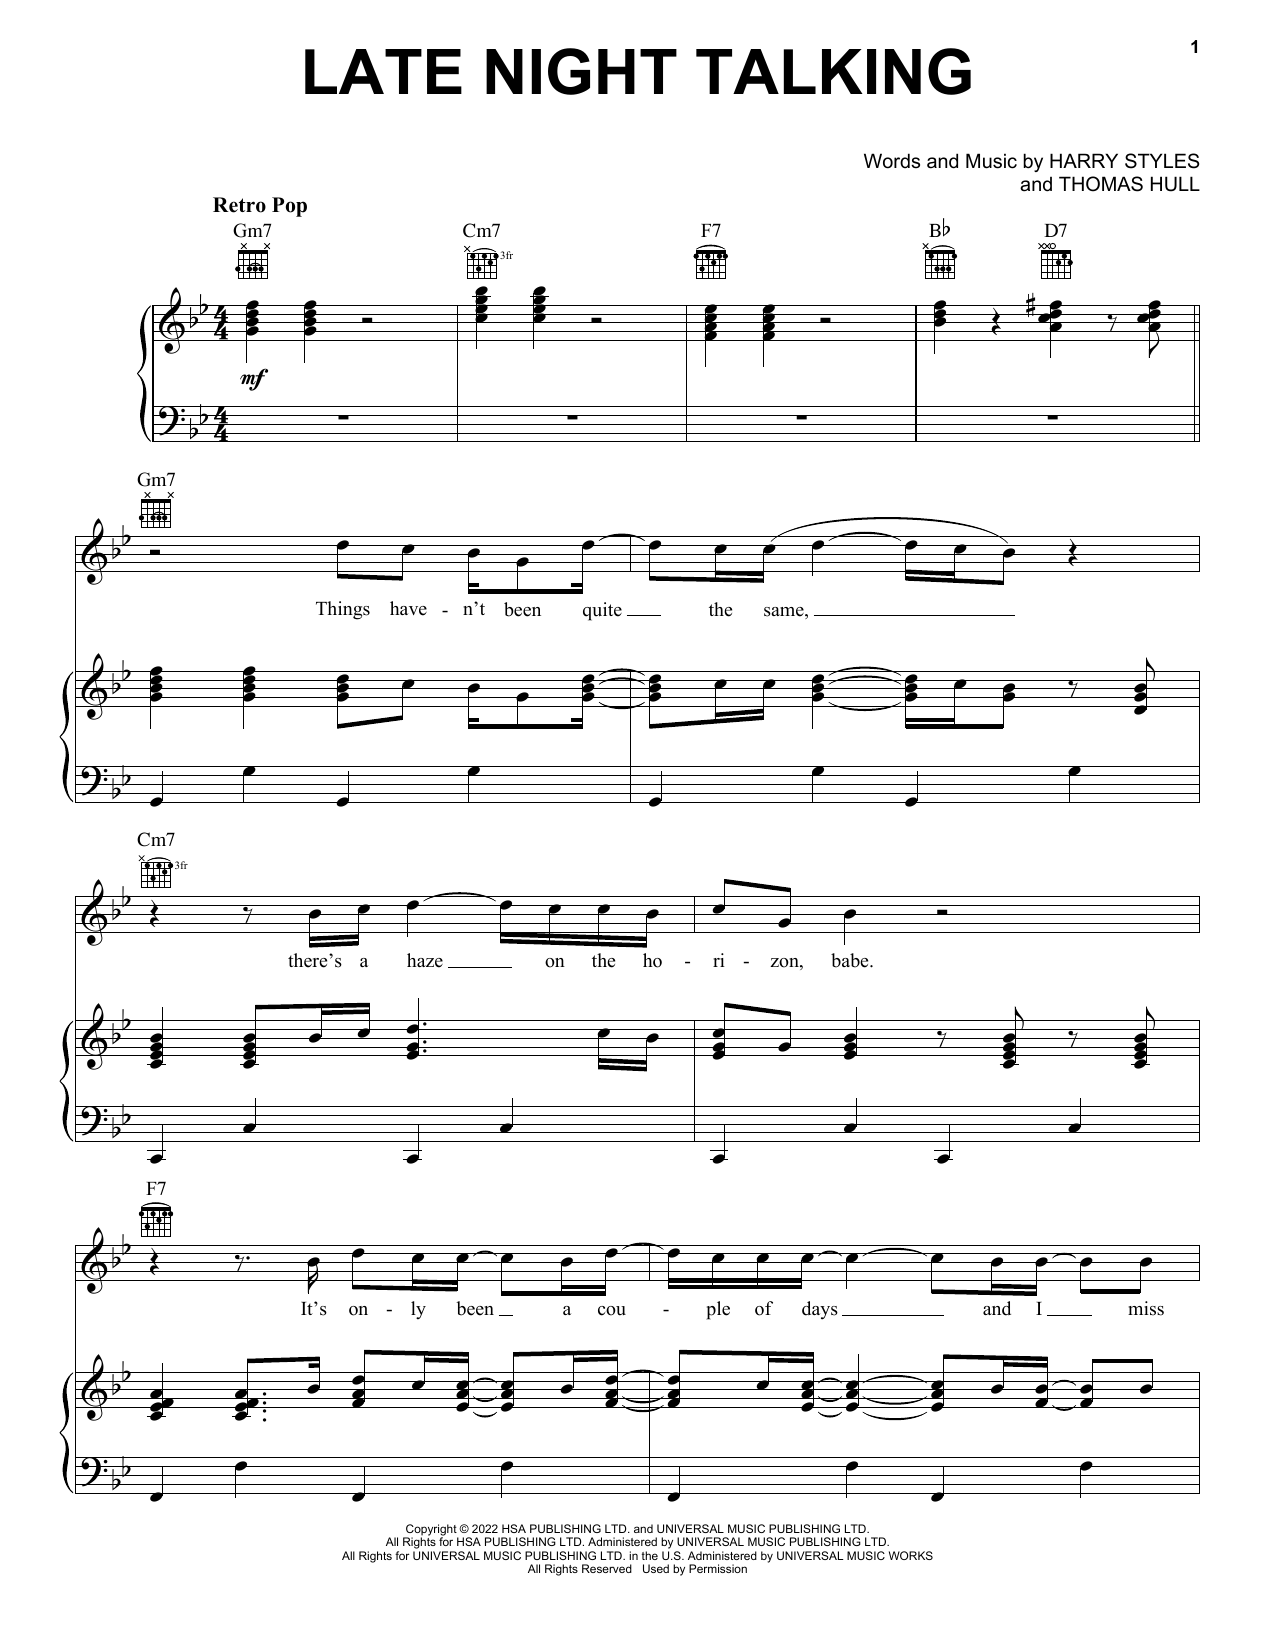 Harry Styles Late Night Talking sheet music notes printable PDF score